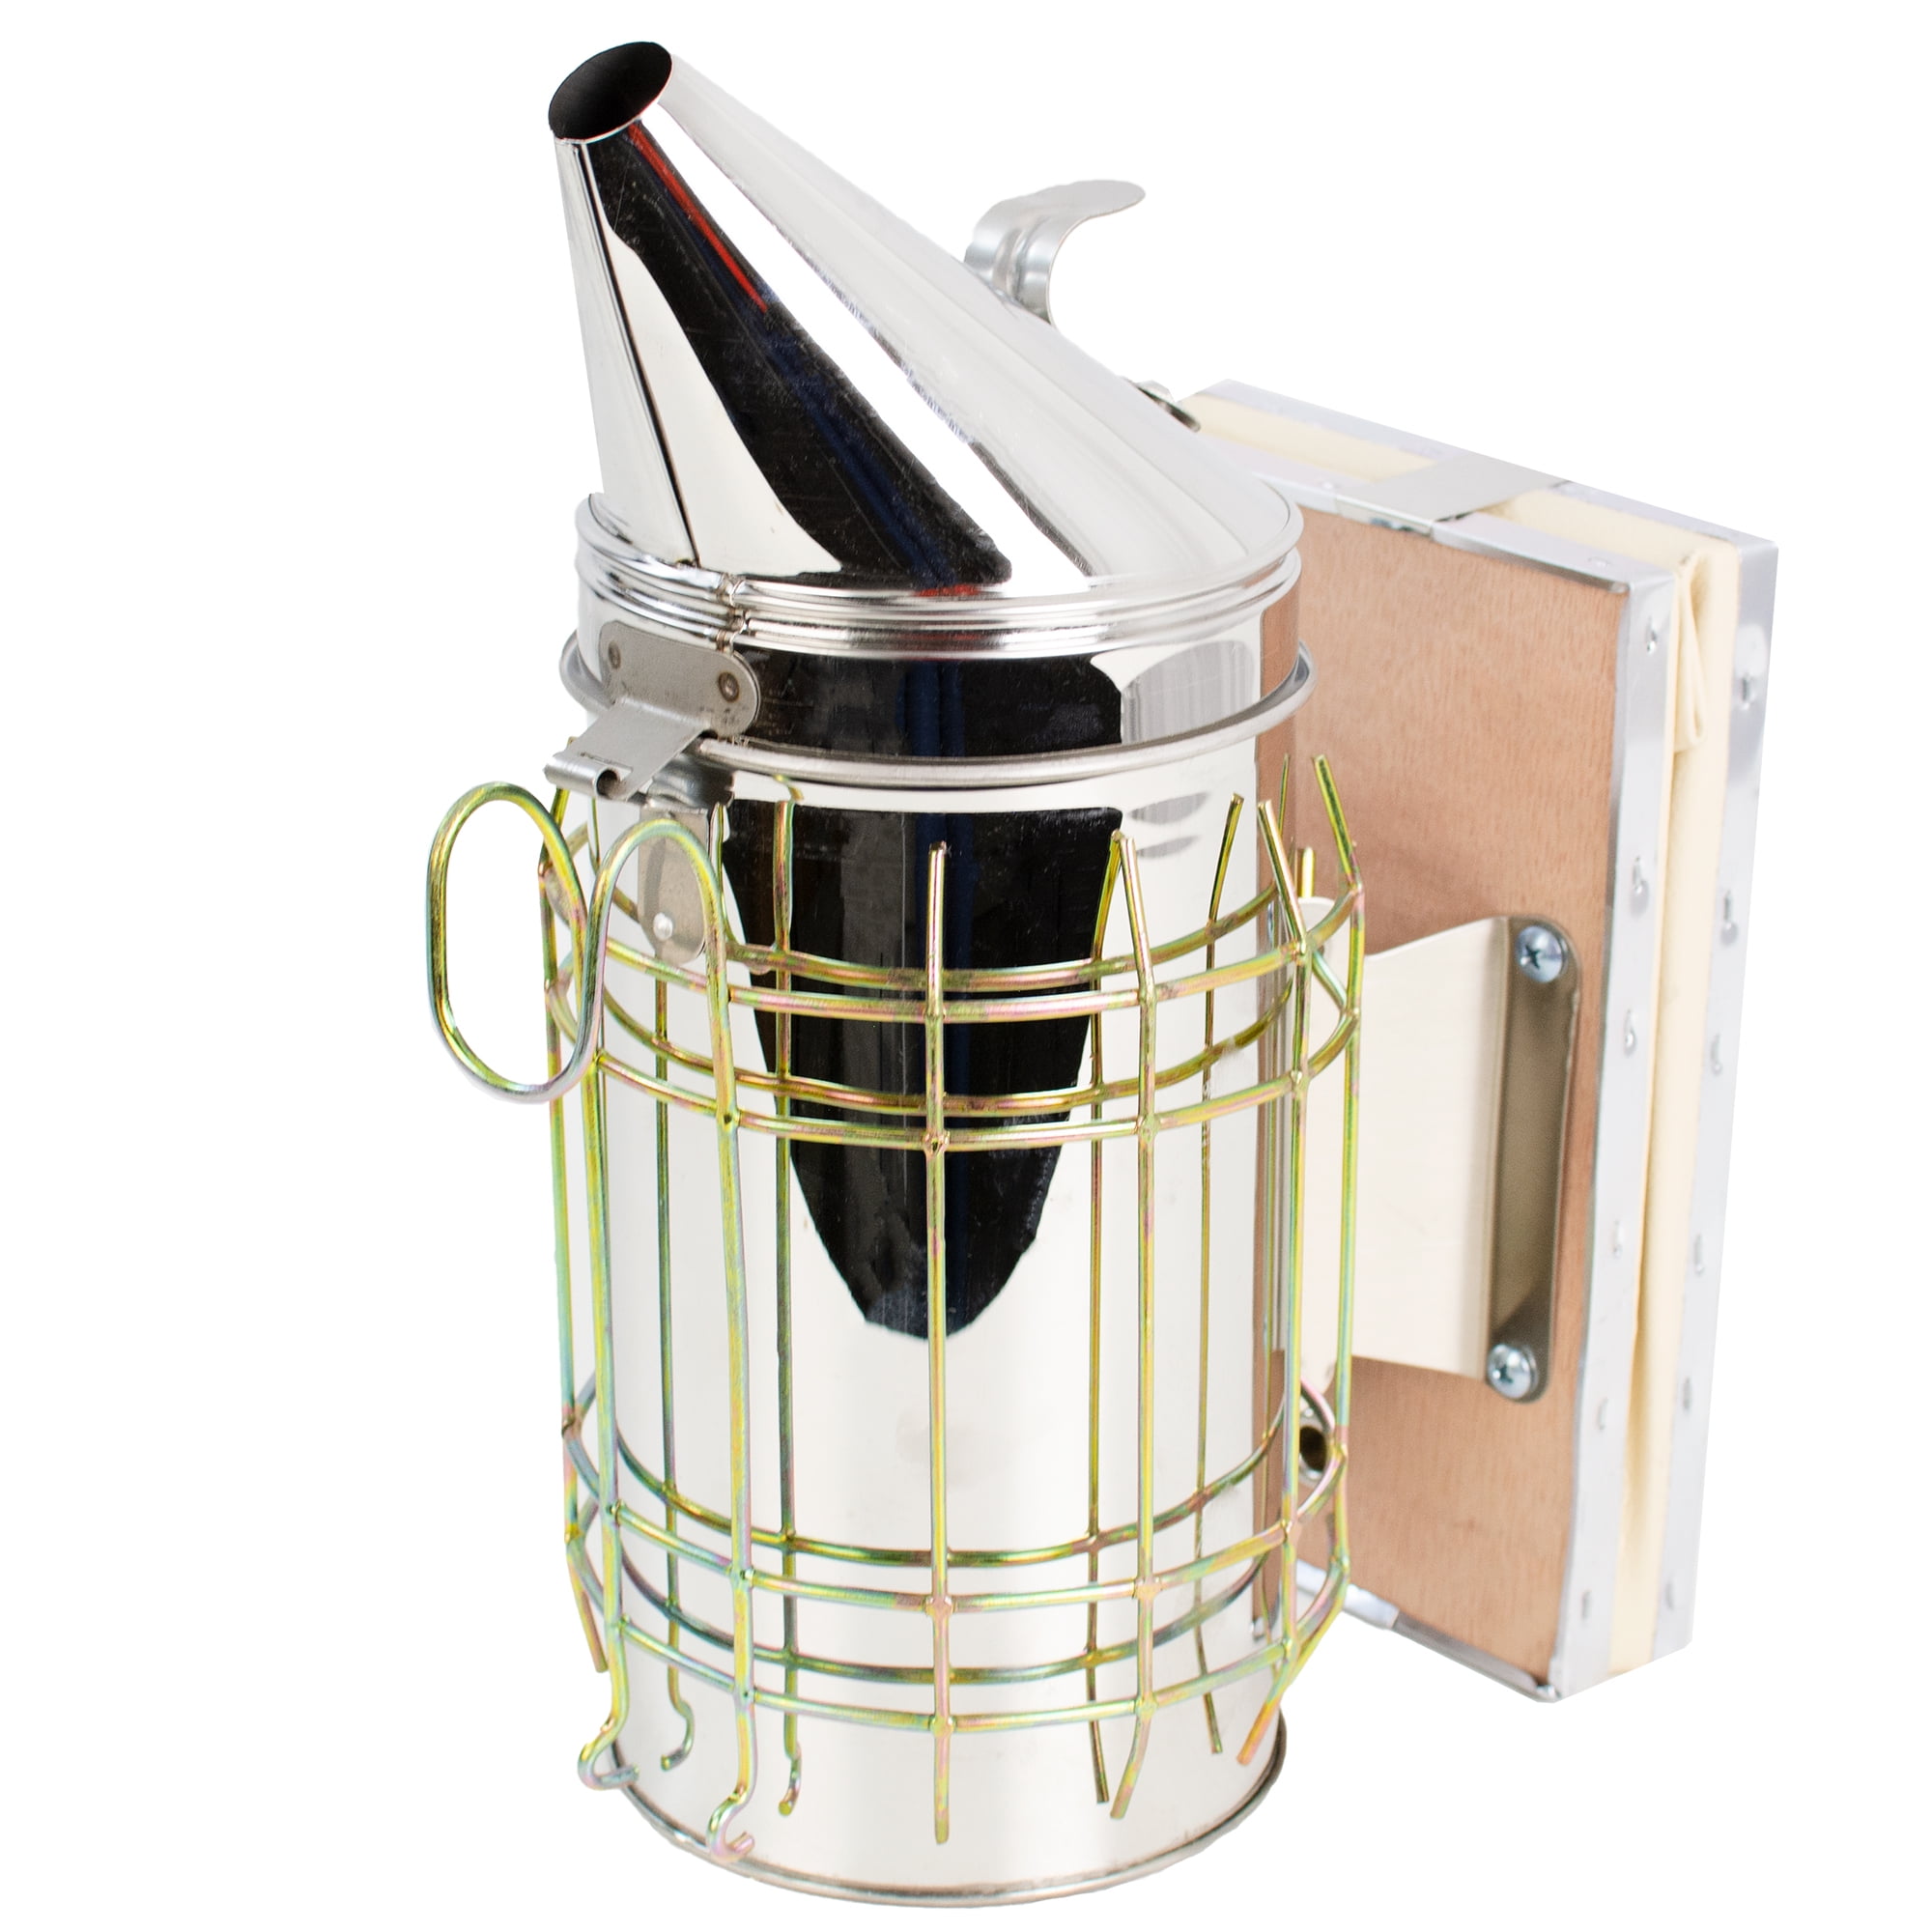 10in Bee Hive Smoker Stainless Steel w/ Heat Shield Calming Beekeeping Equipment 